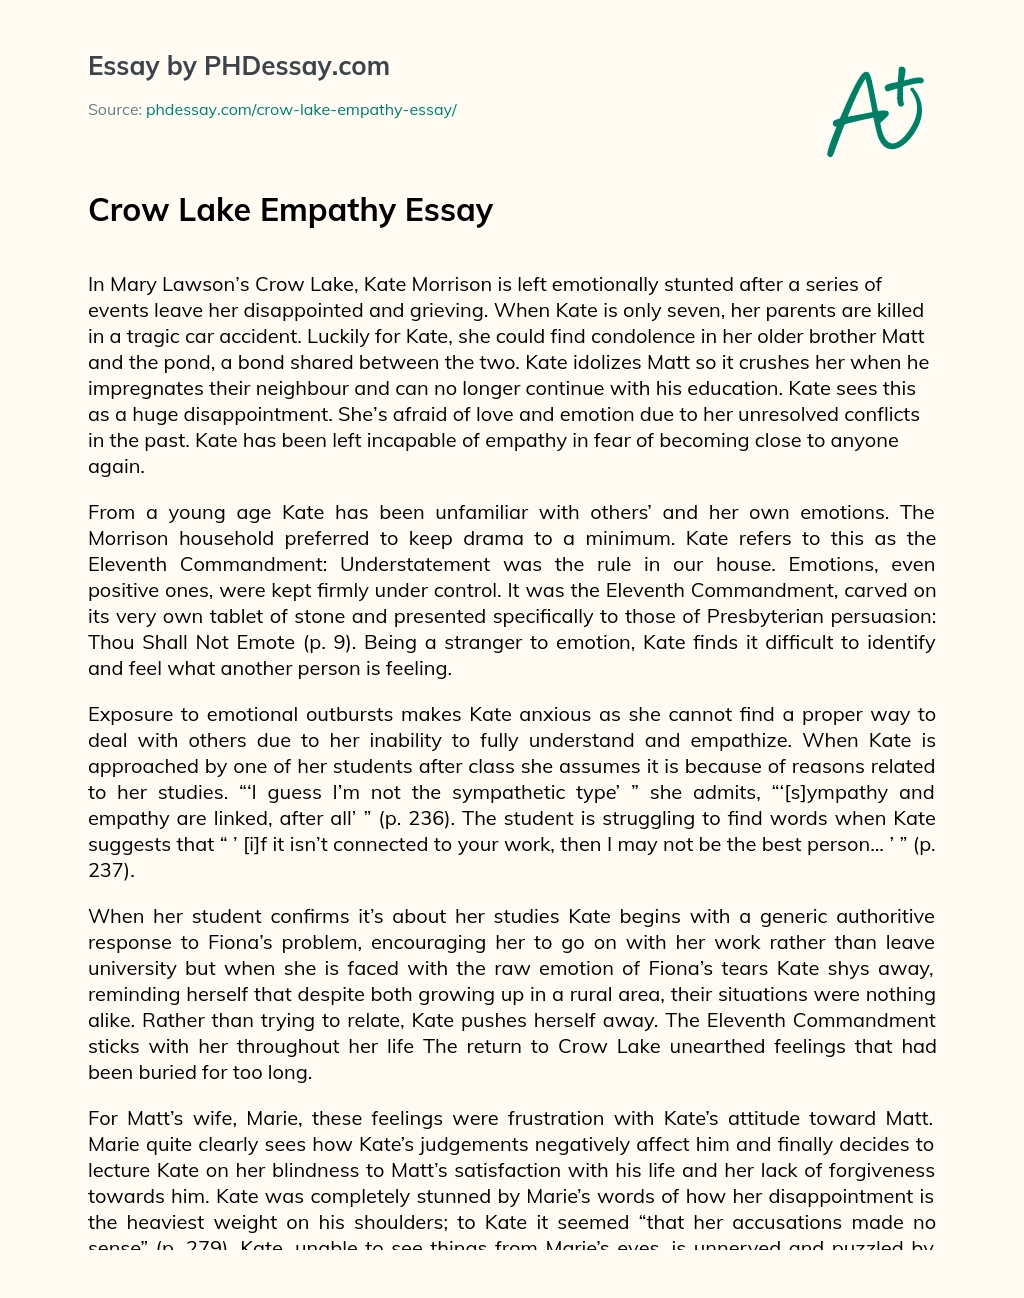 Crow Lake Empathy Essay essay